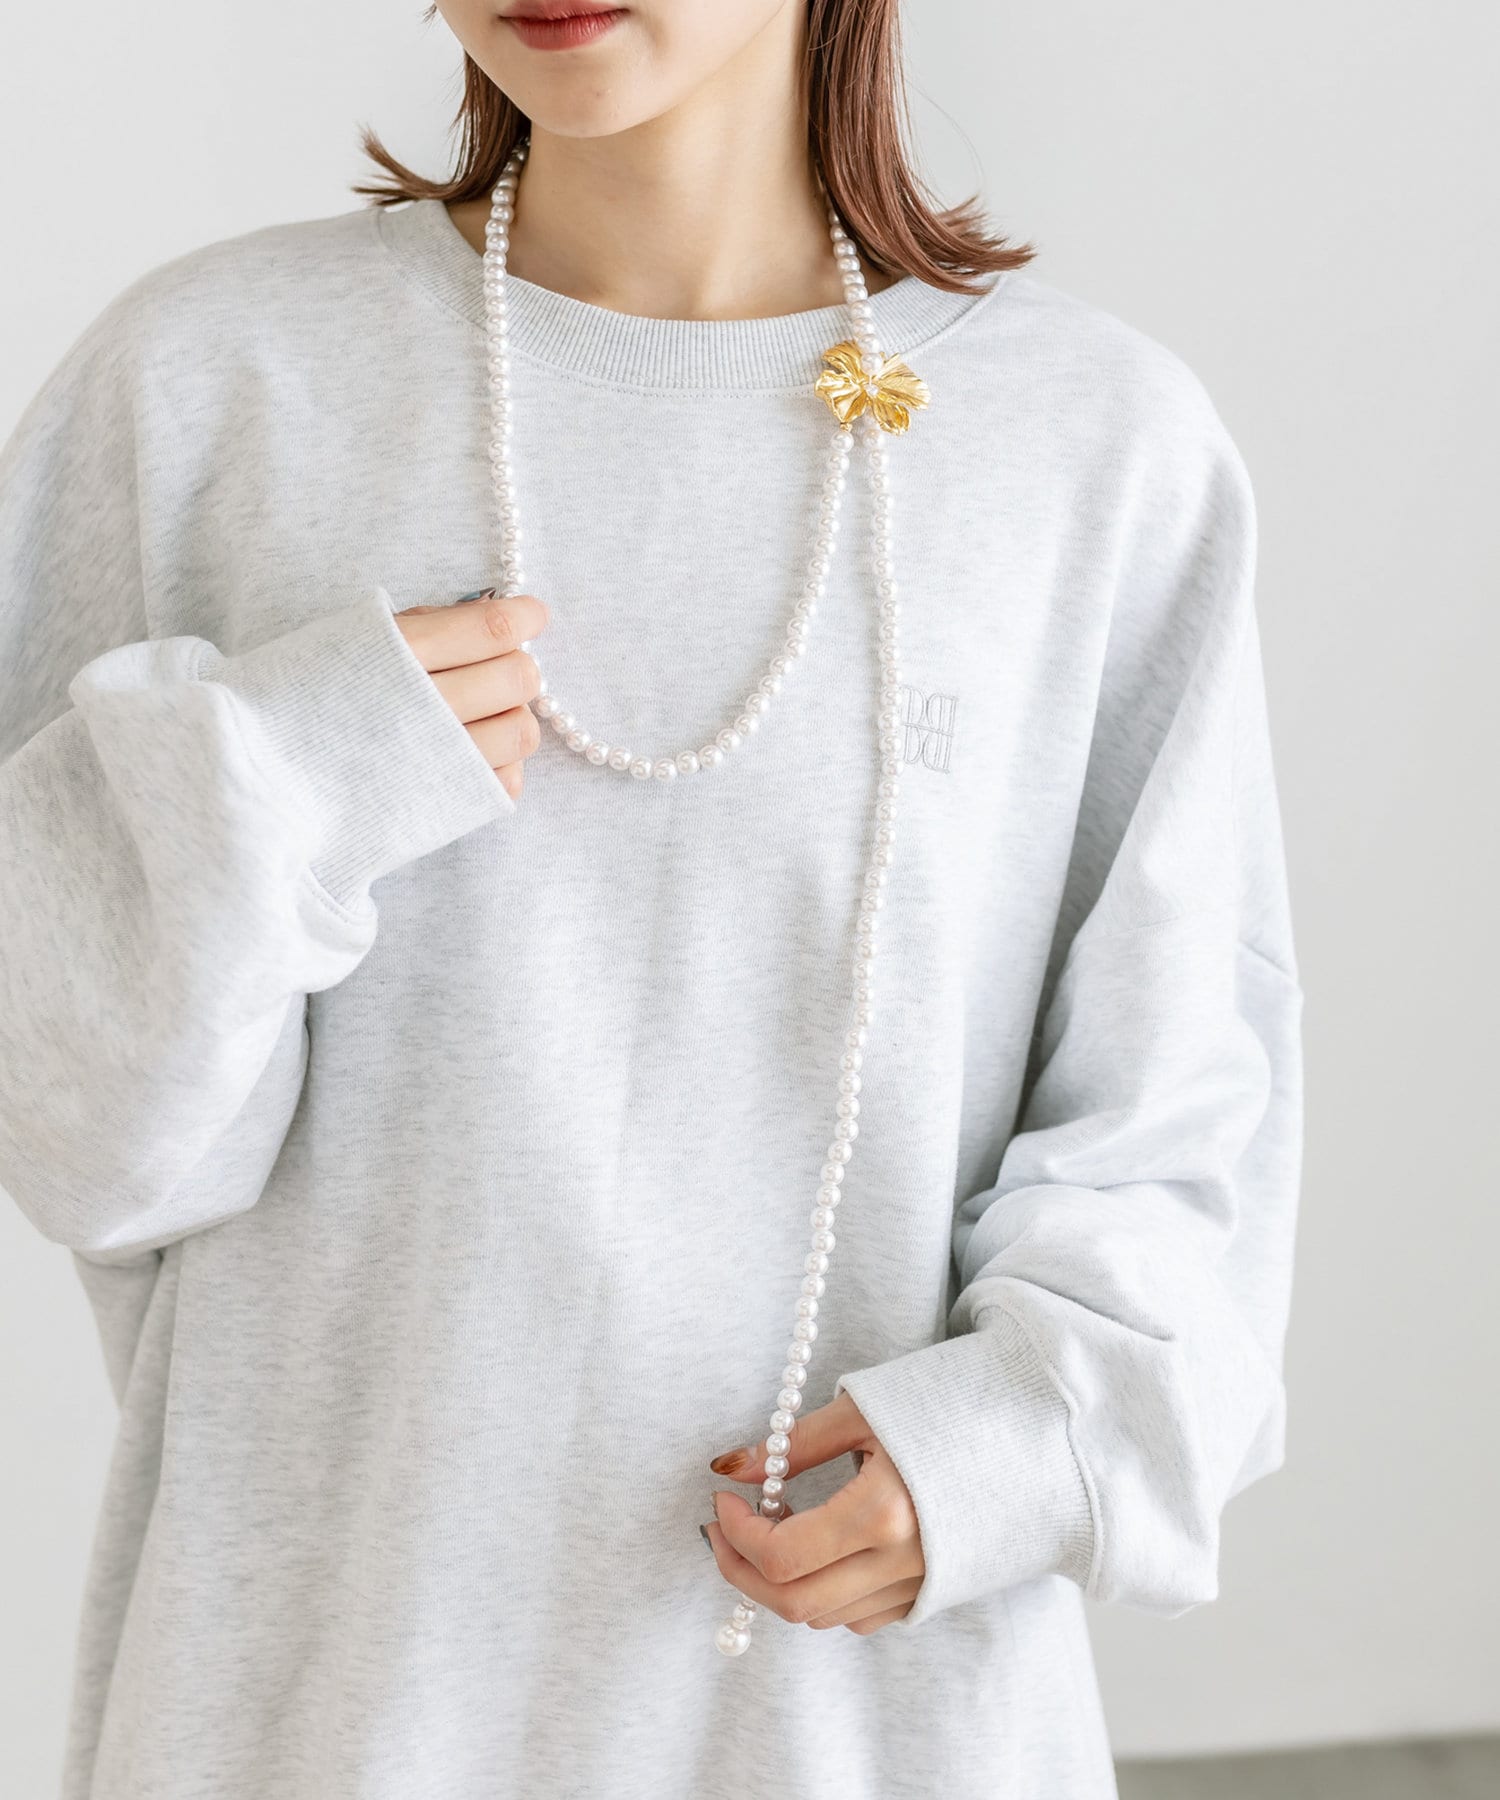 mystic(ミスティック) [Eau] pealflower necklace